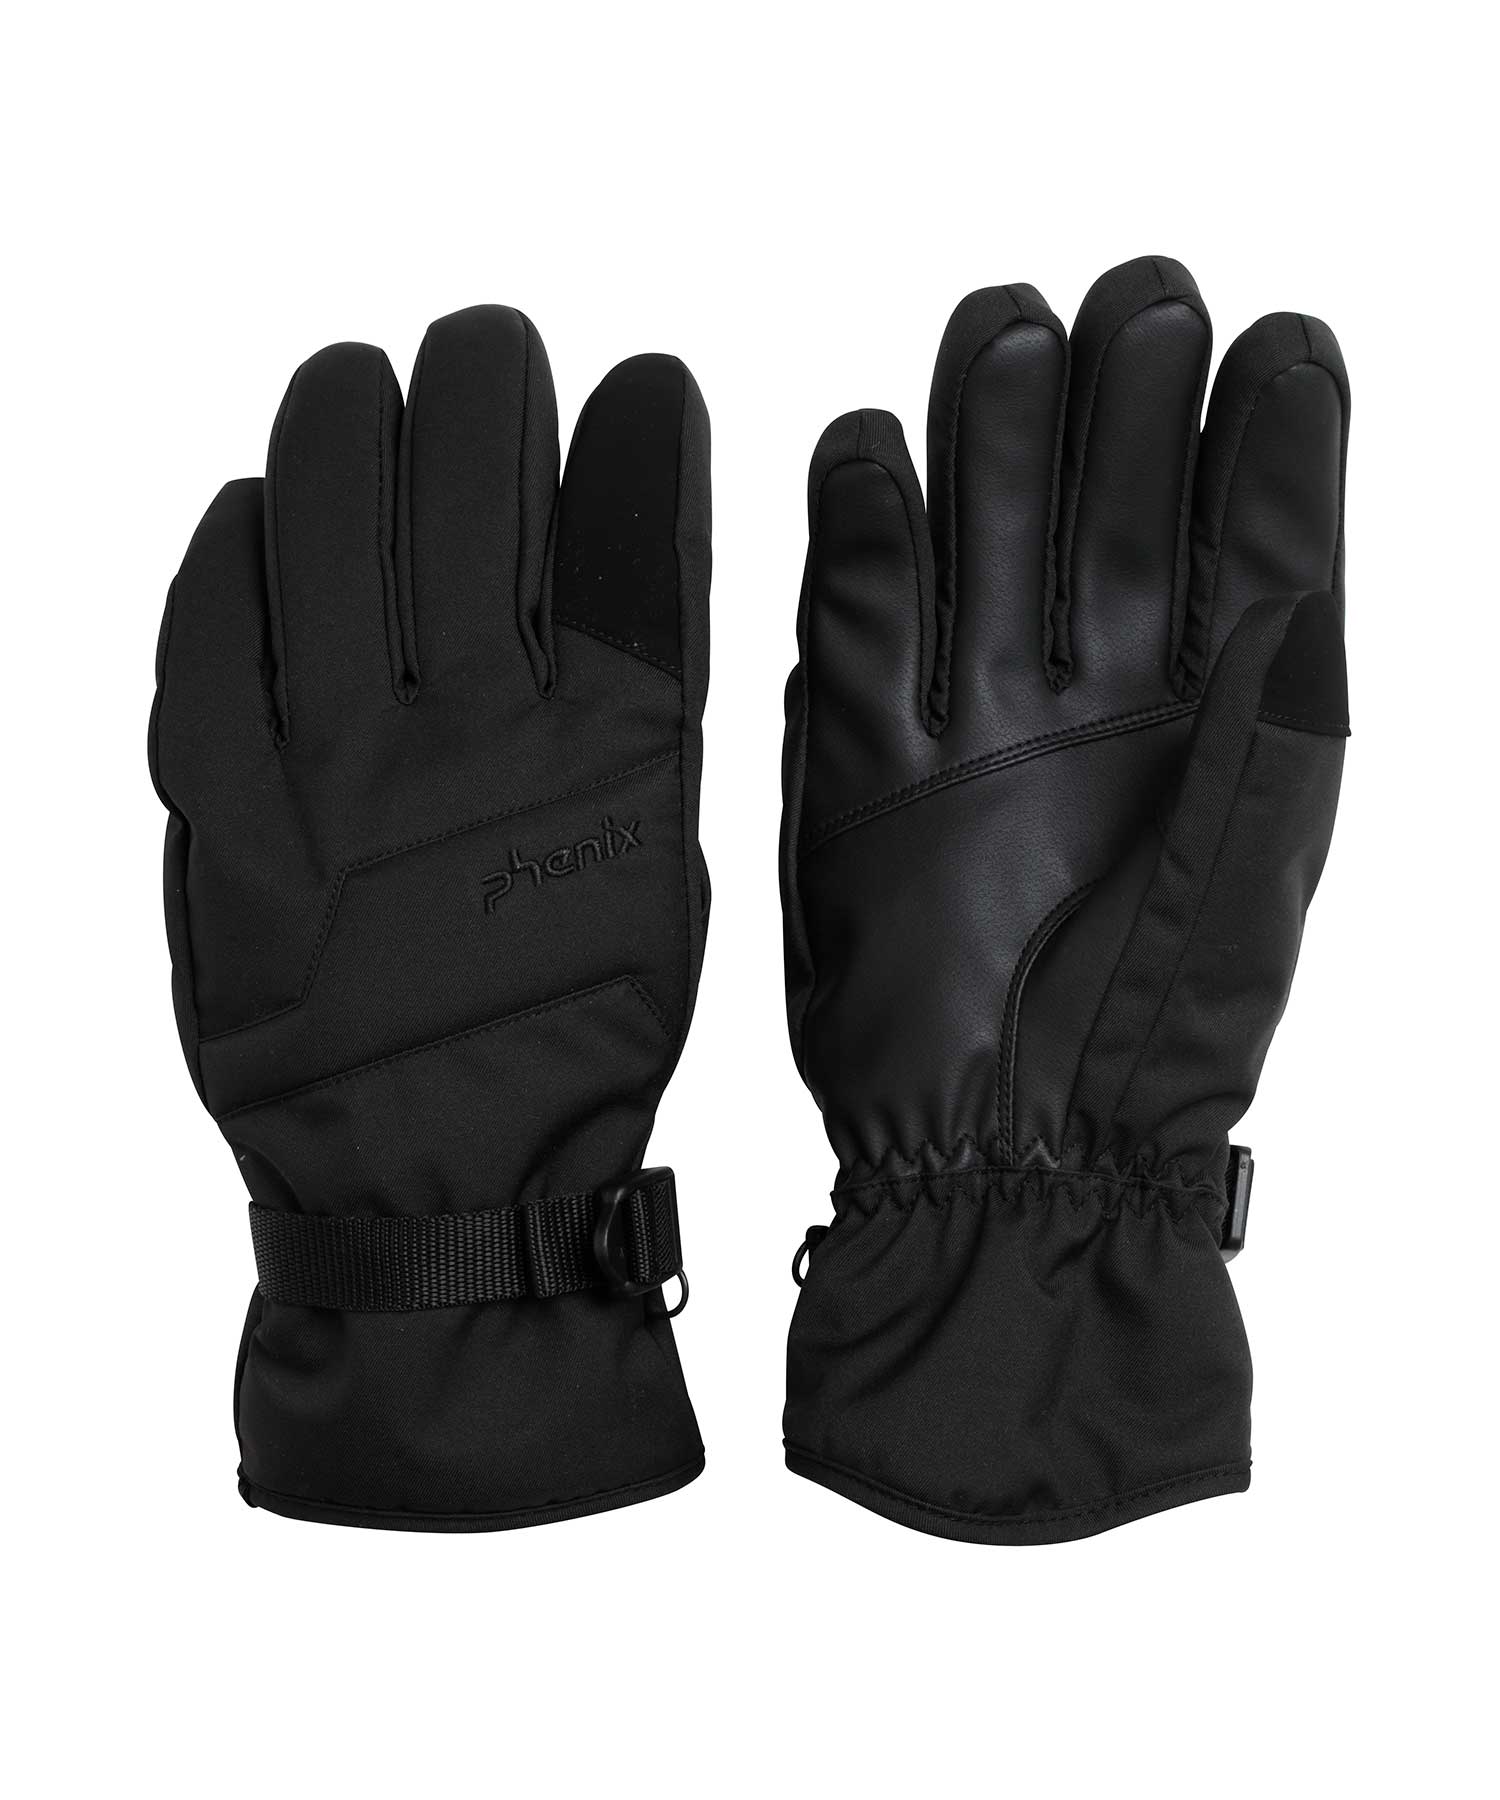 MENS】スキーウェア スキーグローブ Transcends Shade Gloves / ACC 